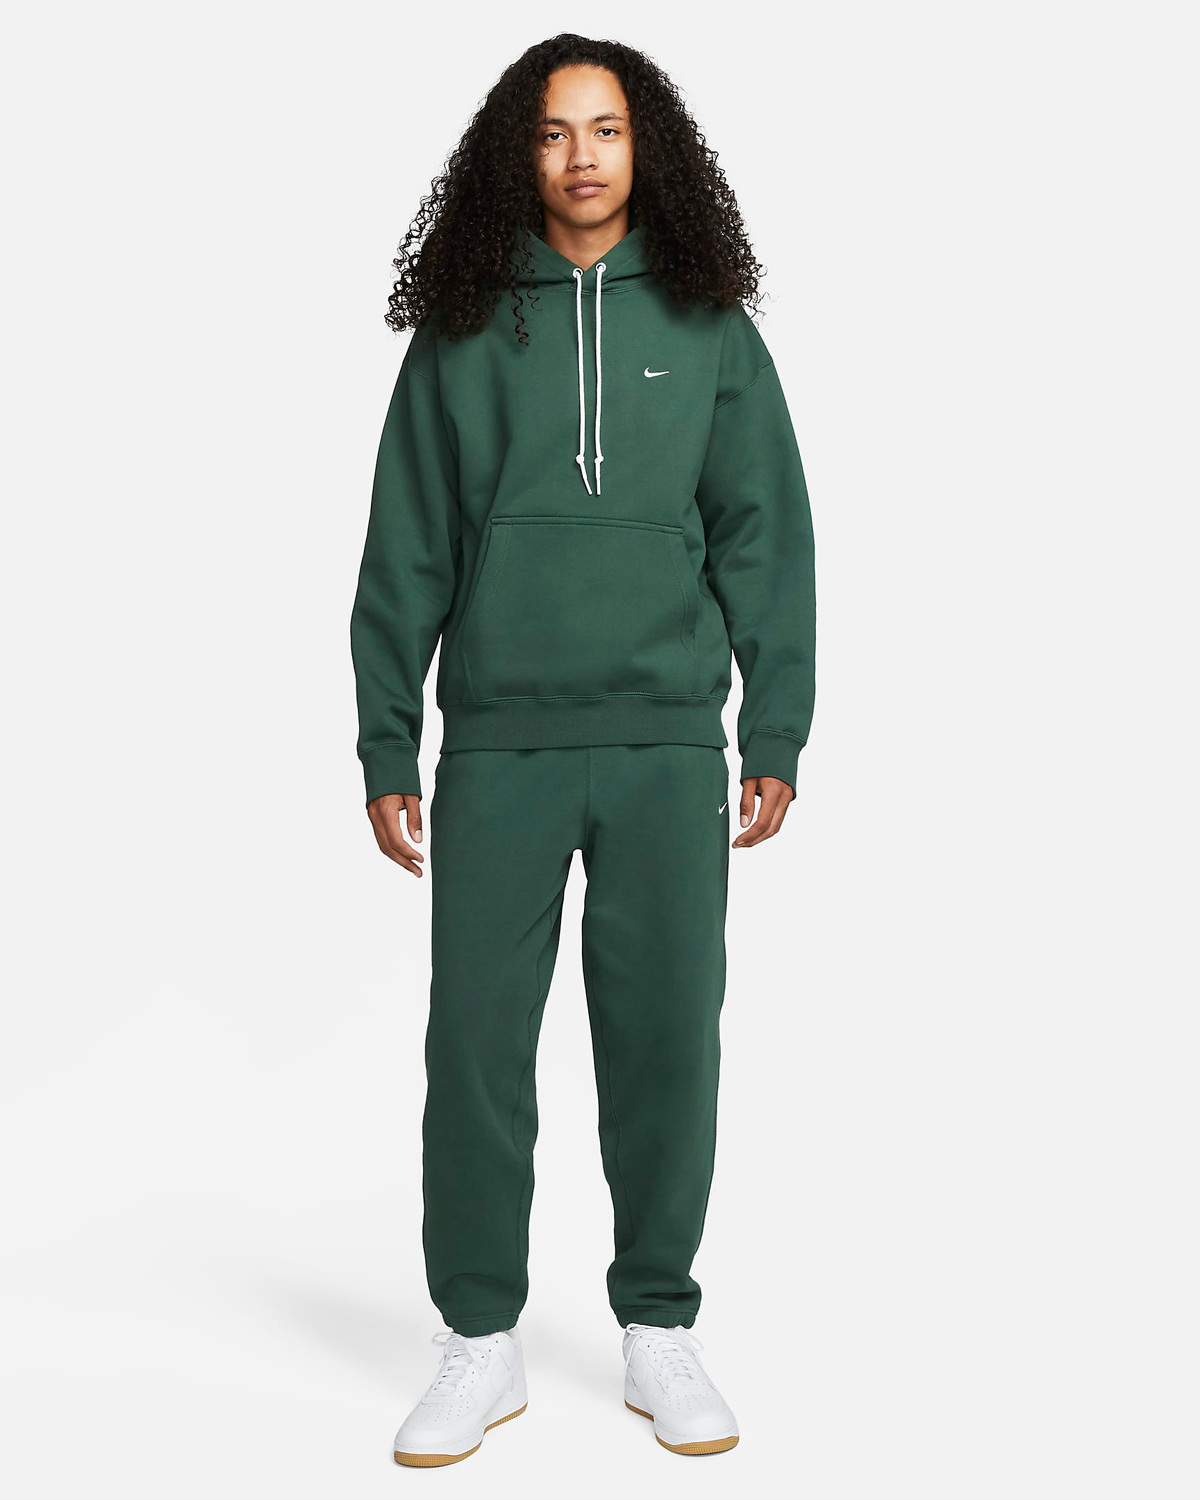 Nike-Fir-Green-Clothing